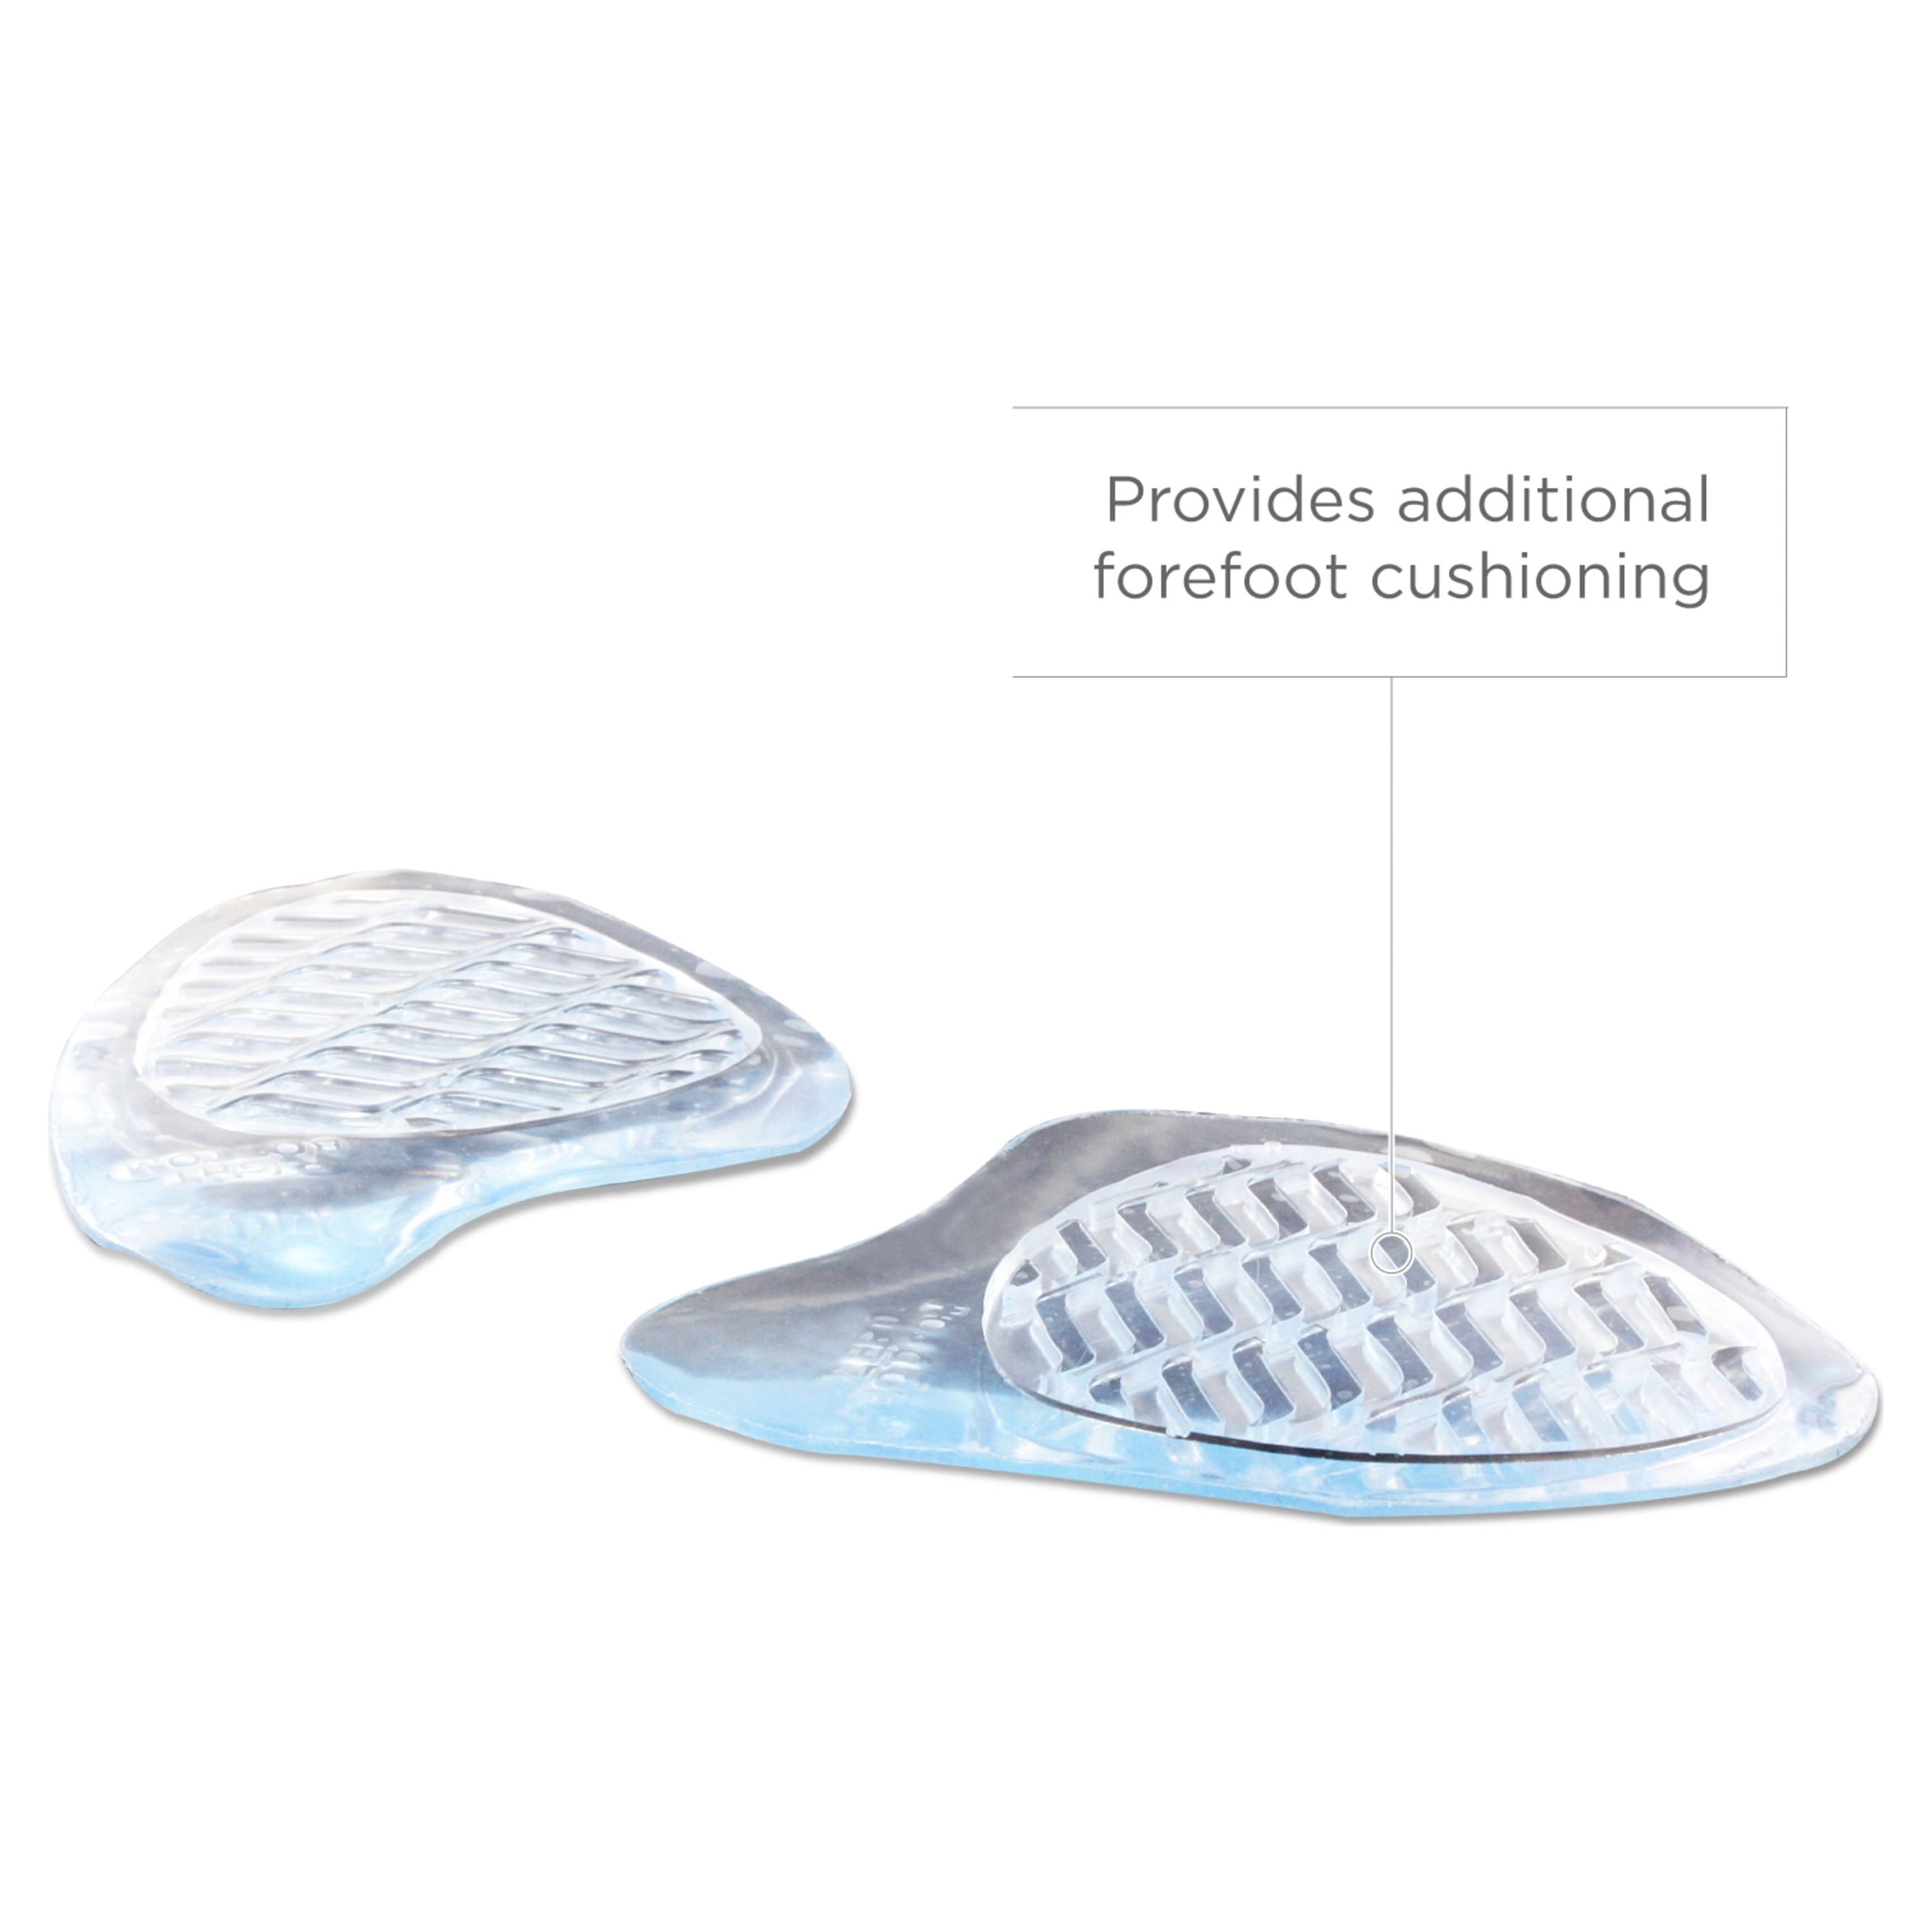 FOOTCLOUD® Comfort Gel Cushions make painful feet and shoes feel